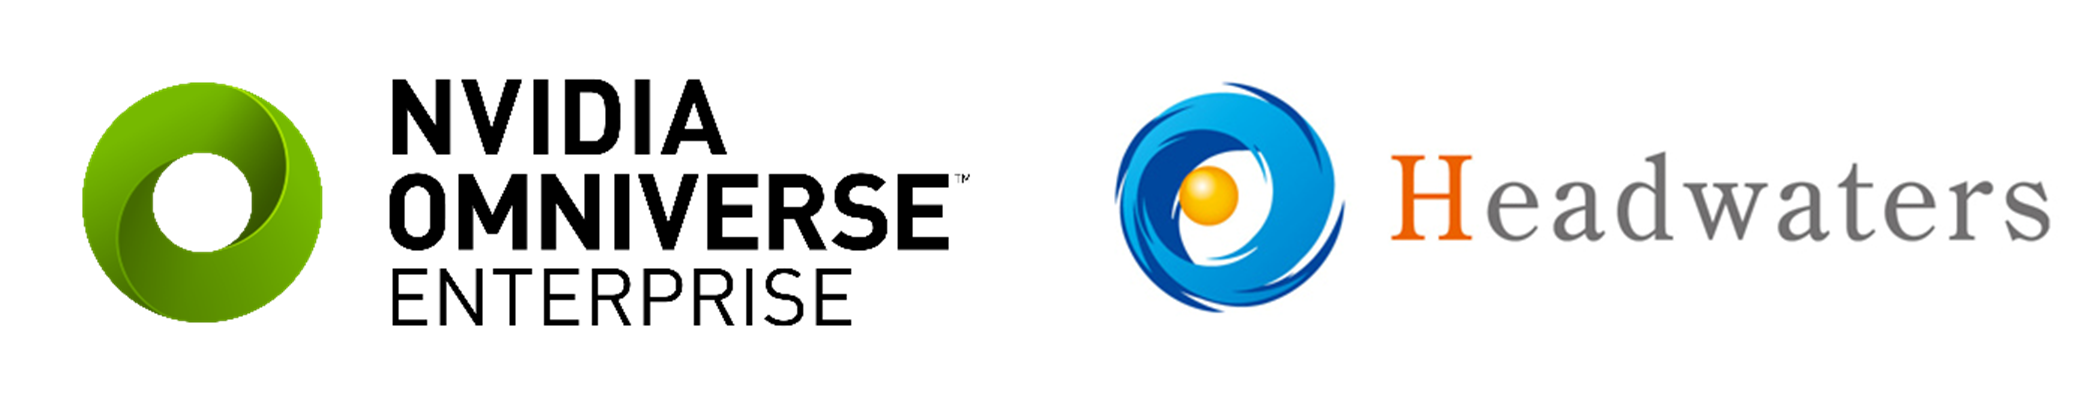 NVIDIA_Omniverse_enterprise_headwaters_logo.png